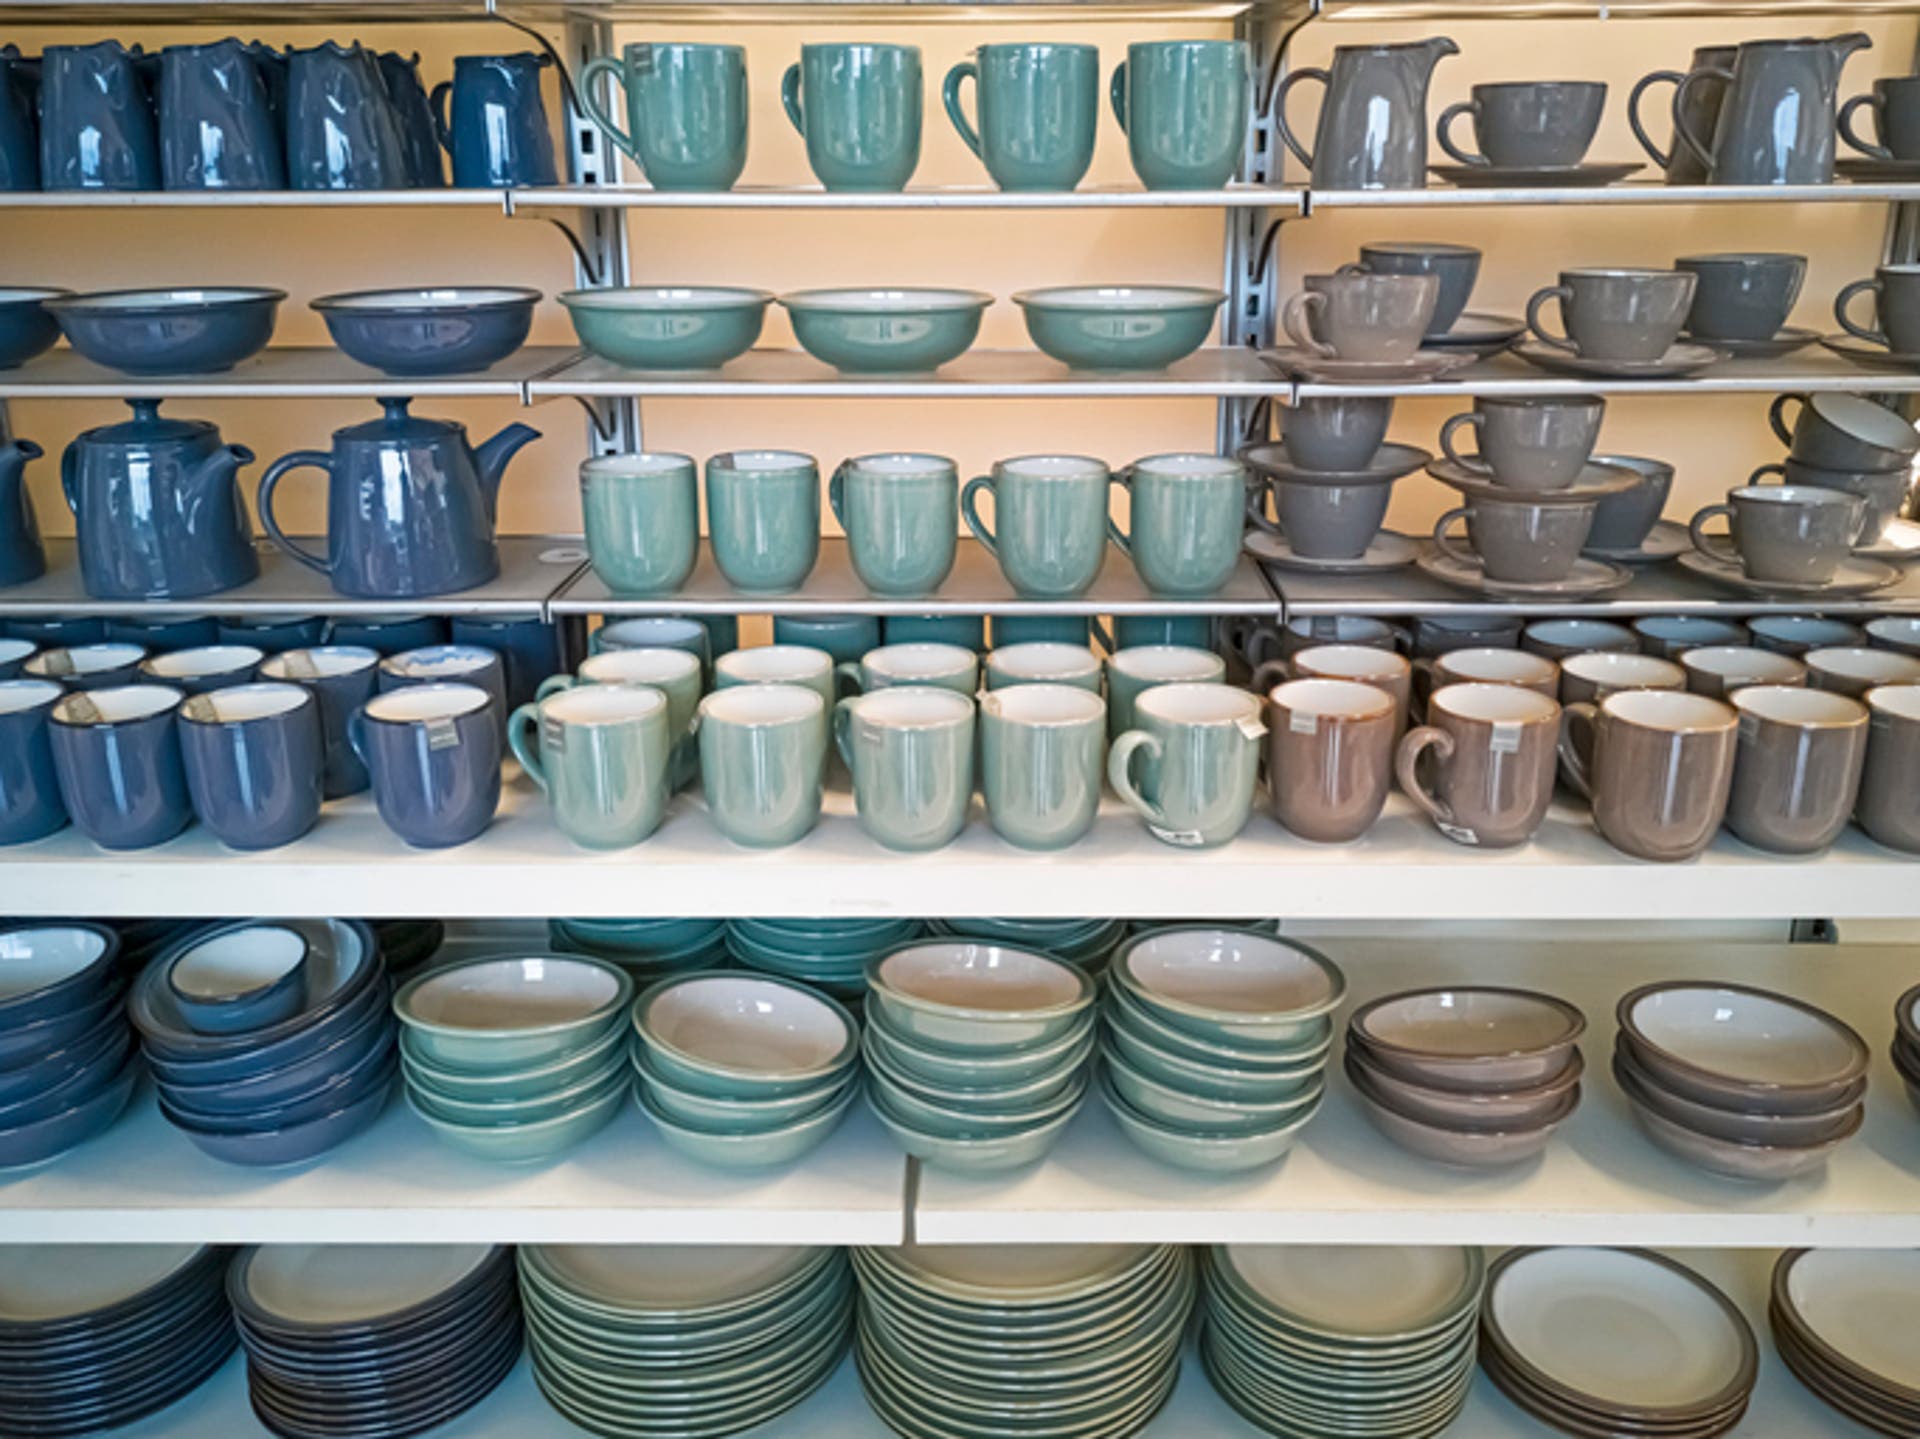  Crockery, porcelain, utensils and other items on shop shelf 